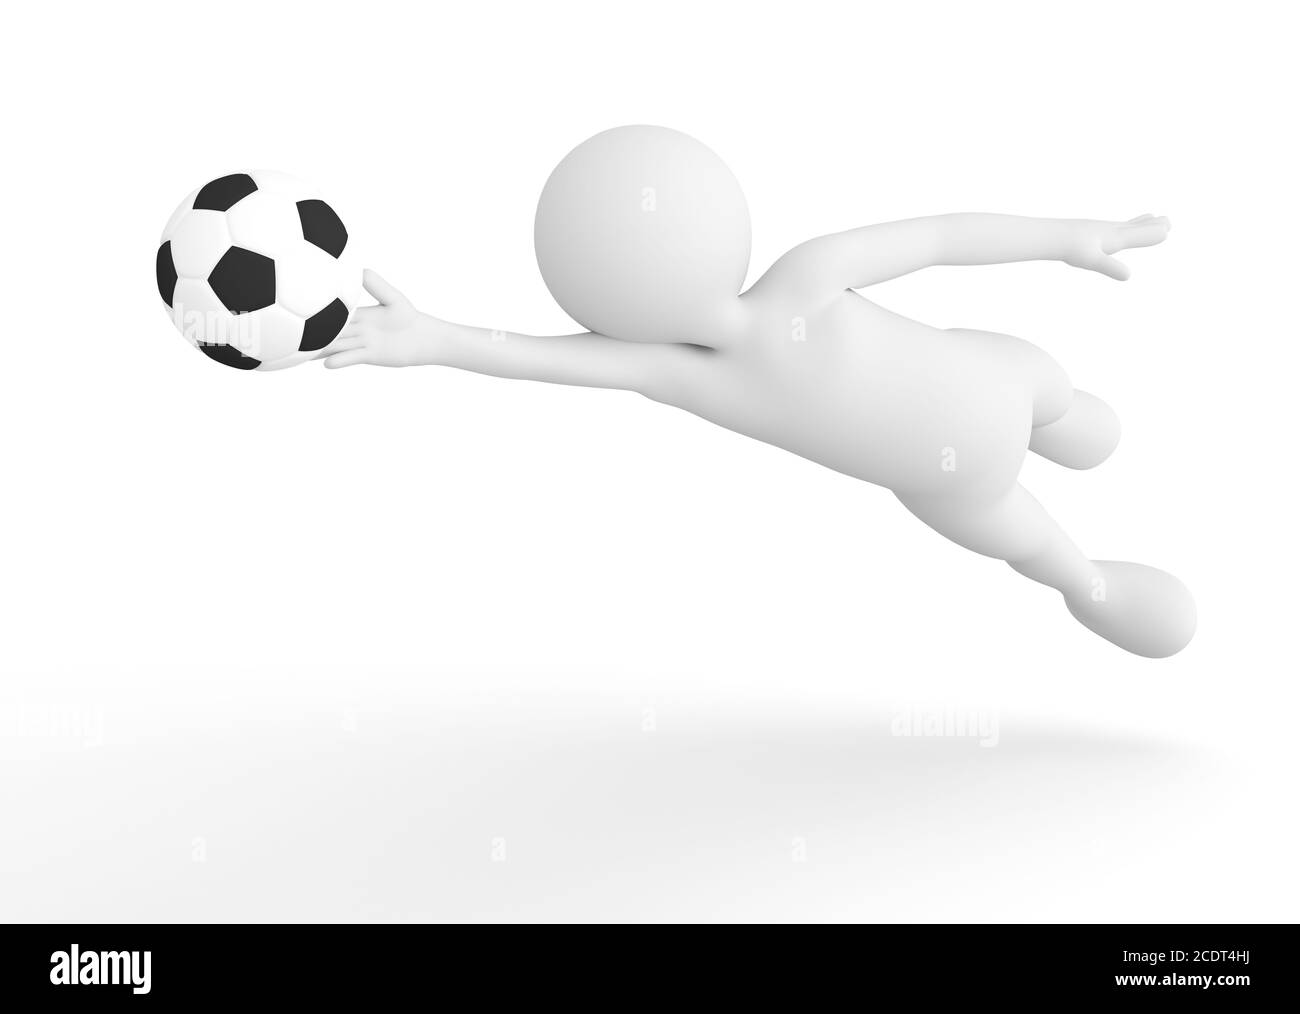 El portero de fútbol de Toon Man salva la pelota del gol. Concepto de fútbol. Foto de stock